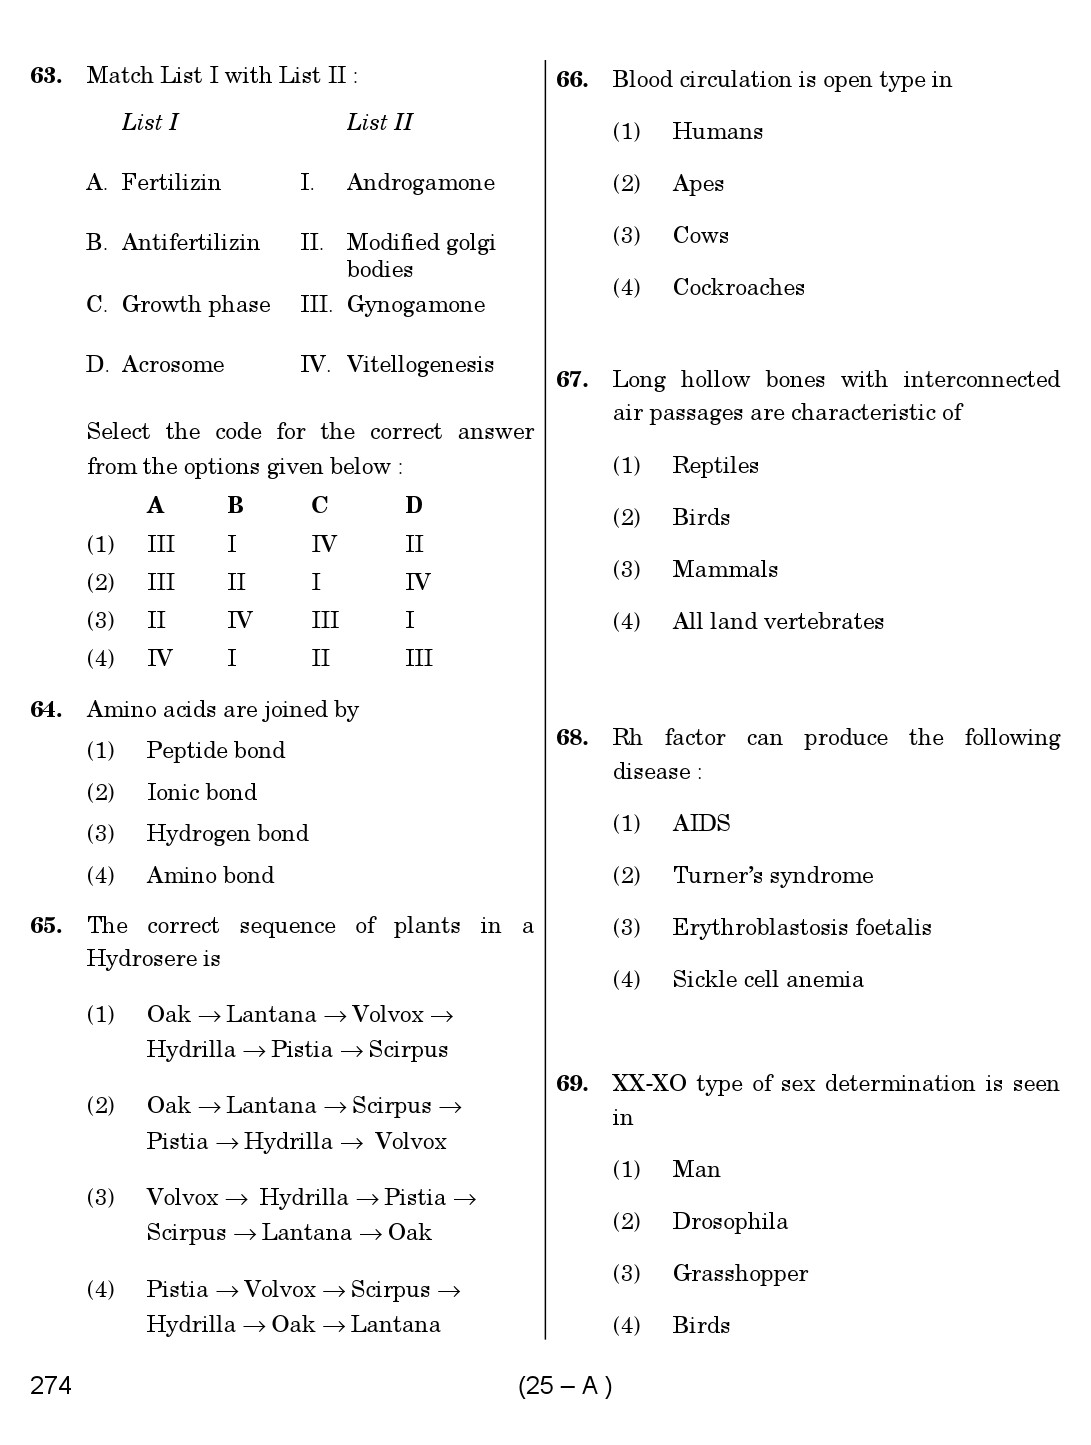 Karnataka PSC Science Teacher Exam Sample Question Paper Subject code 274 25